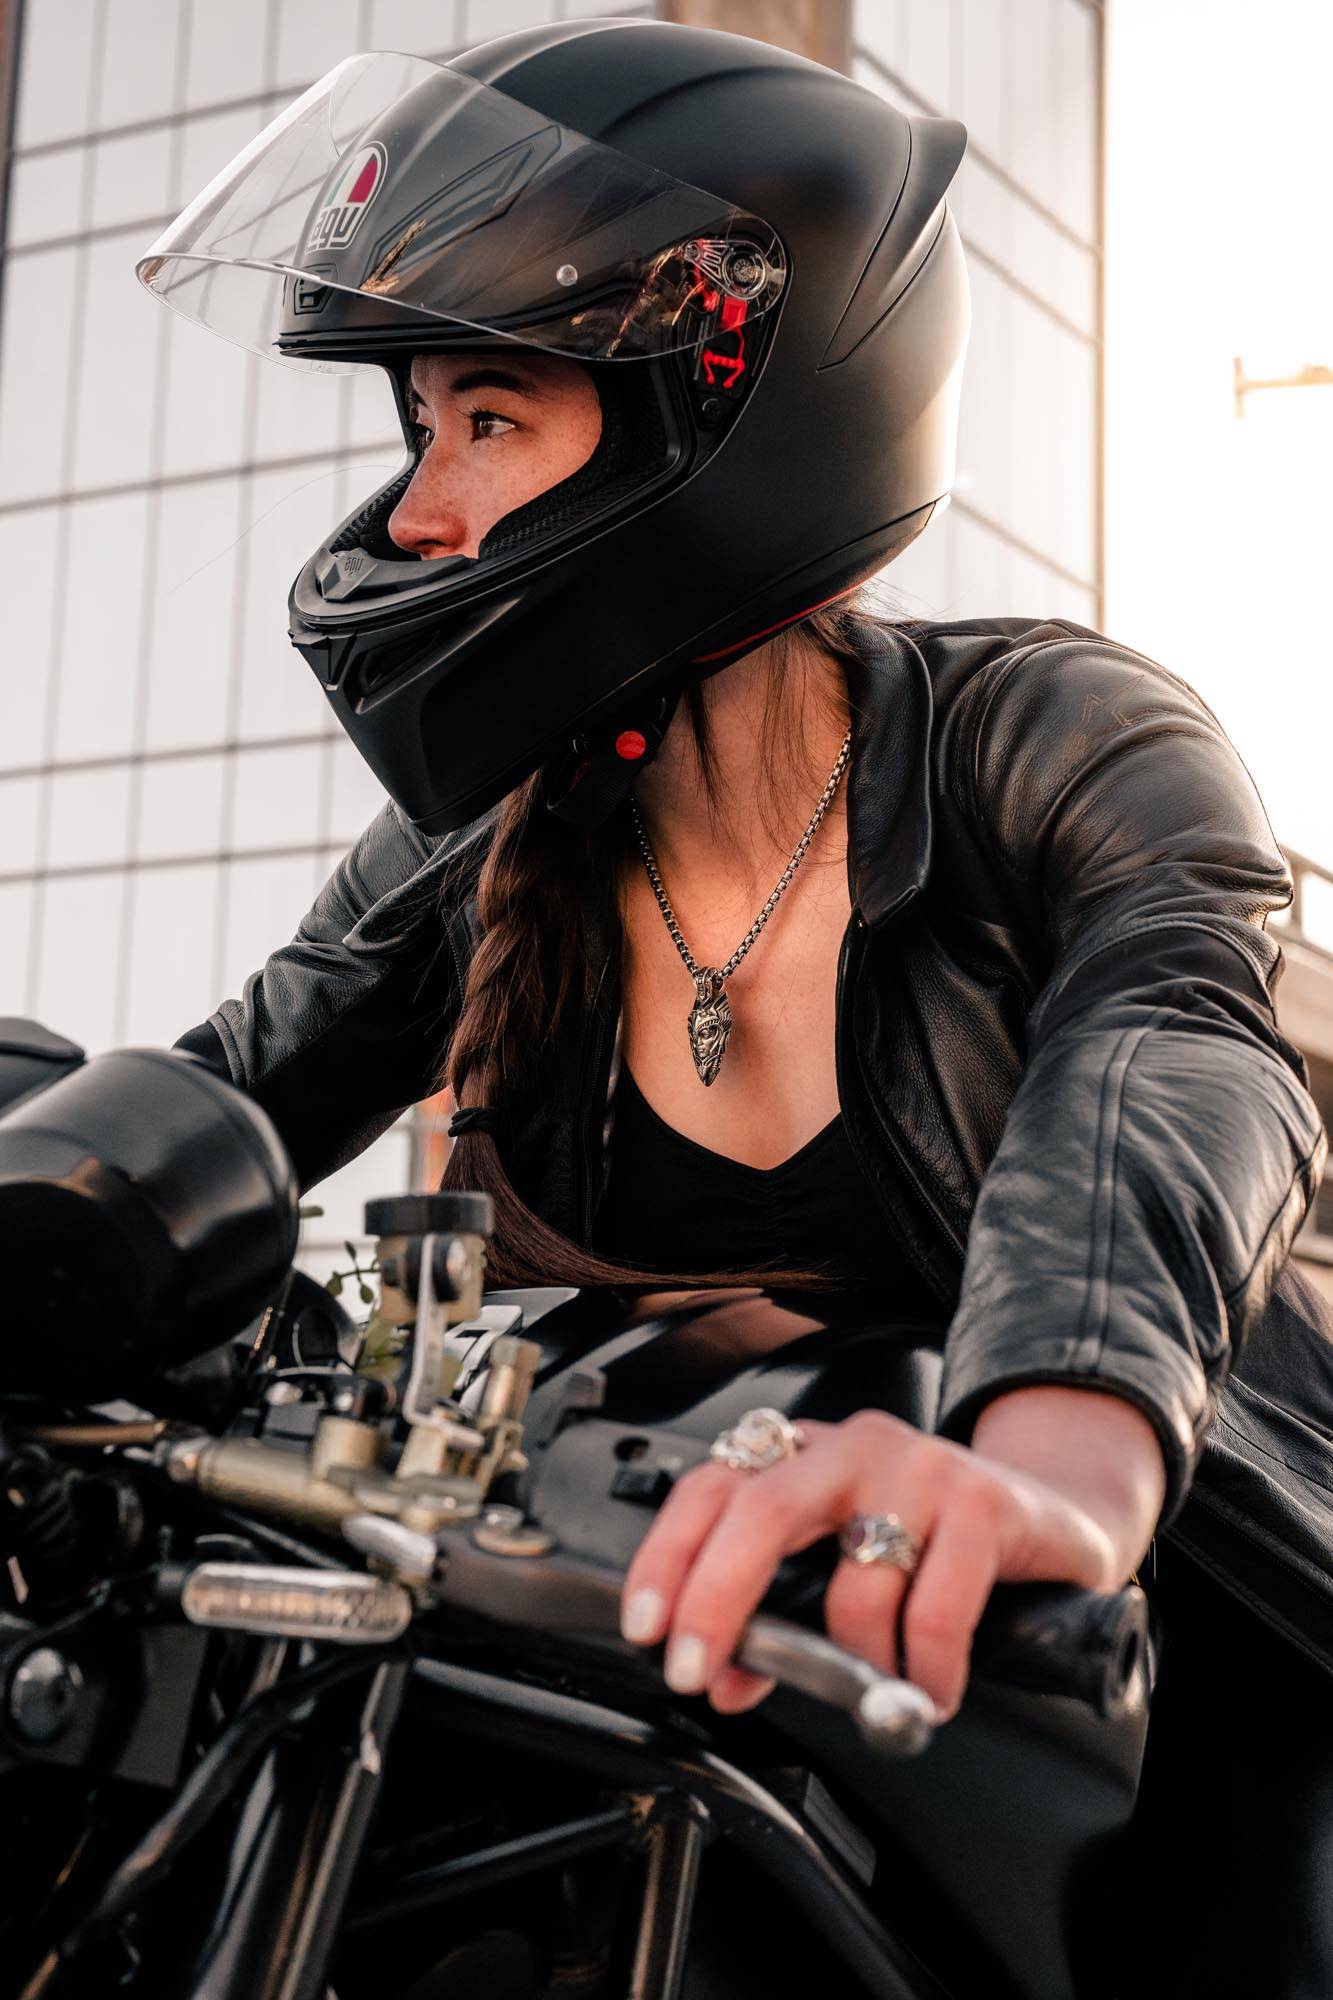 A woman motorcyclist—a modern Valkyrie